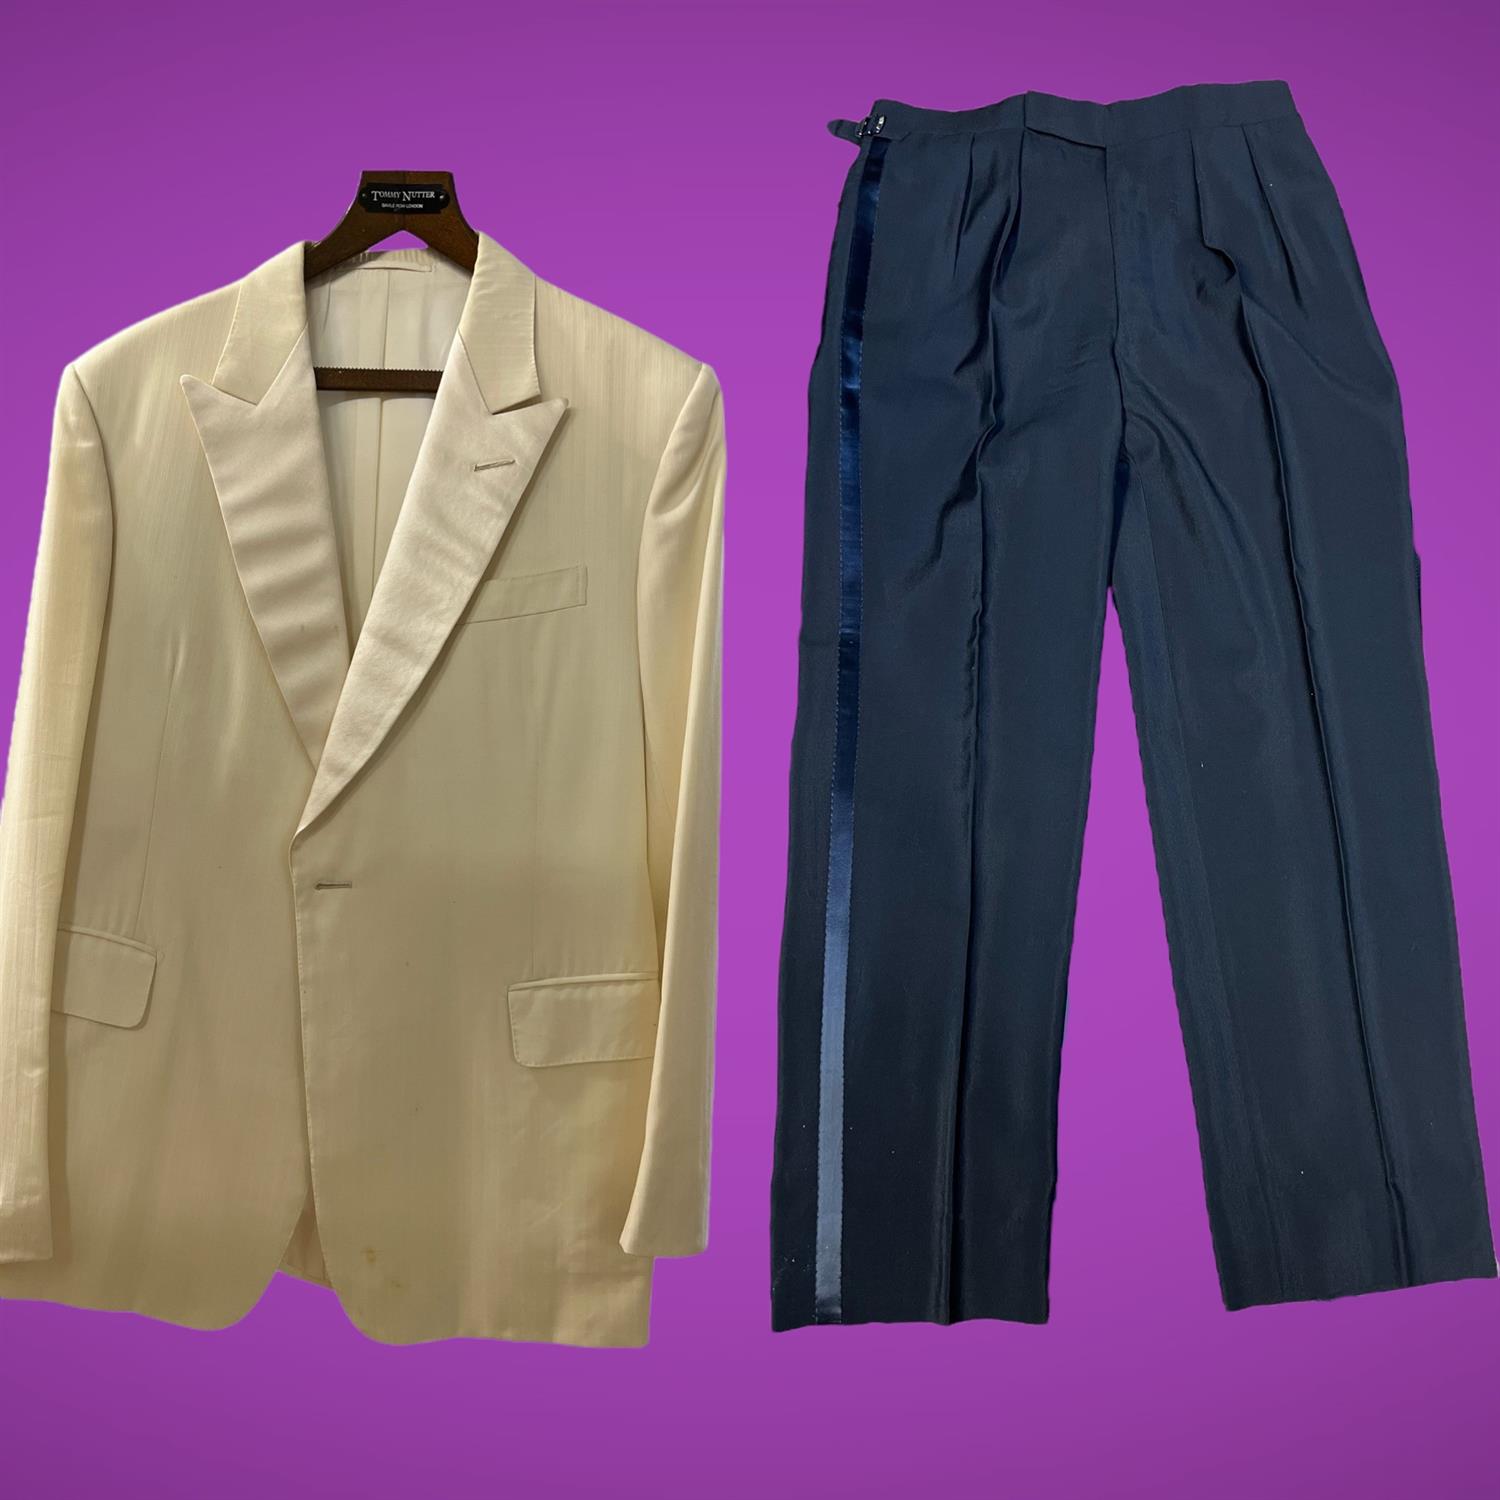 TOMMY NUTTER Savile Row tailor bespoke-made dinner-suit/ tuxedo suit. Cream single breasted dinner